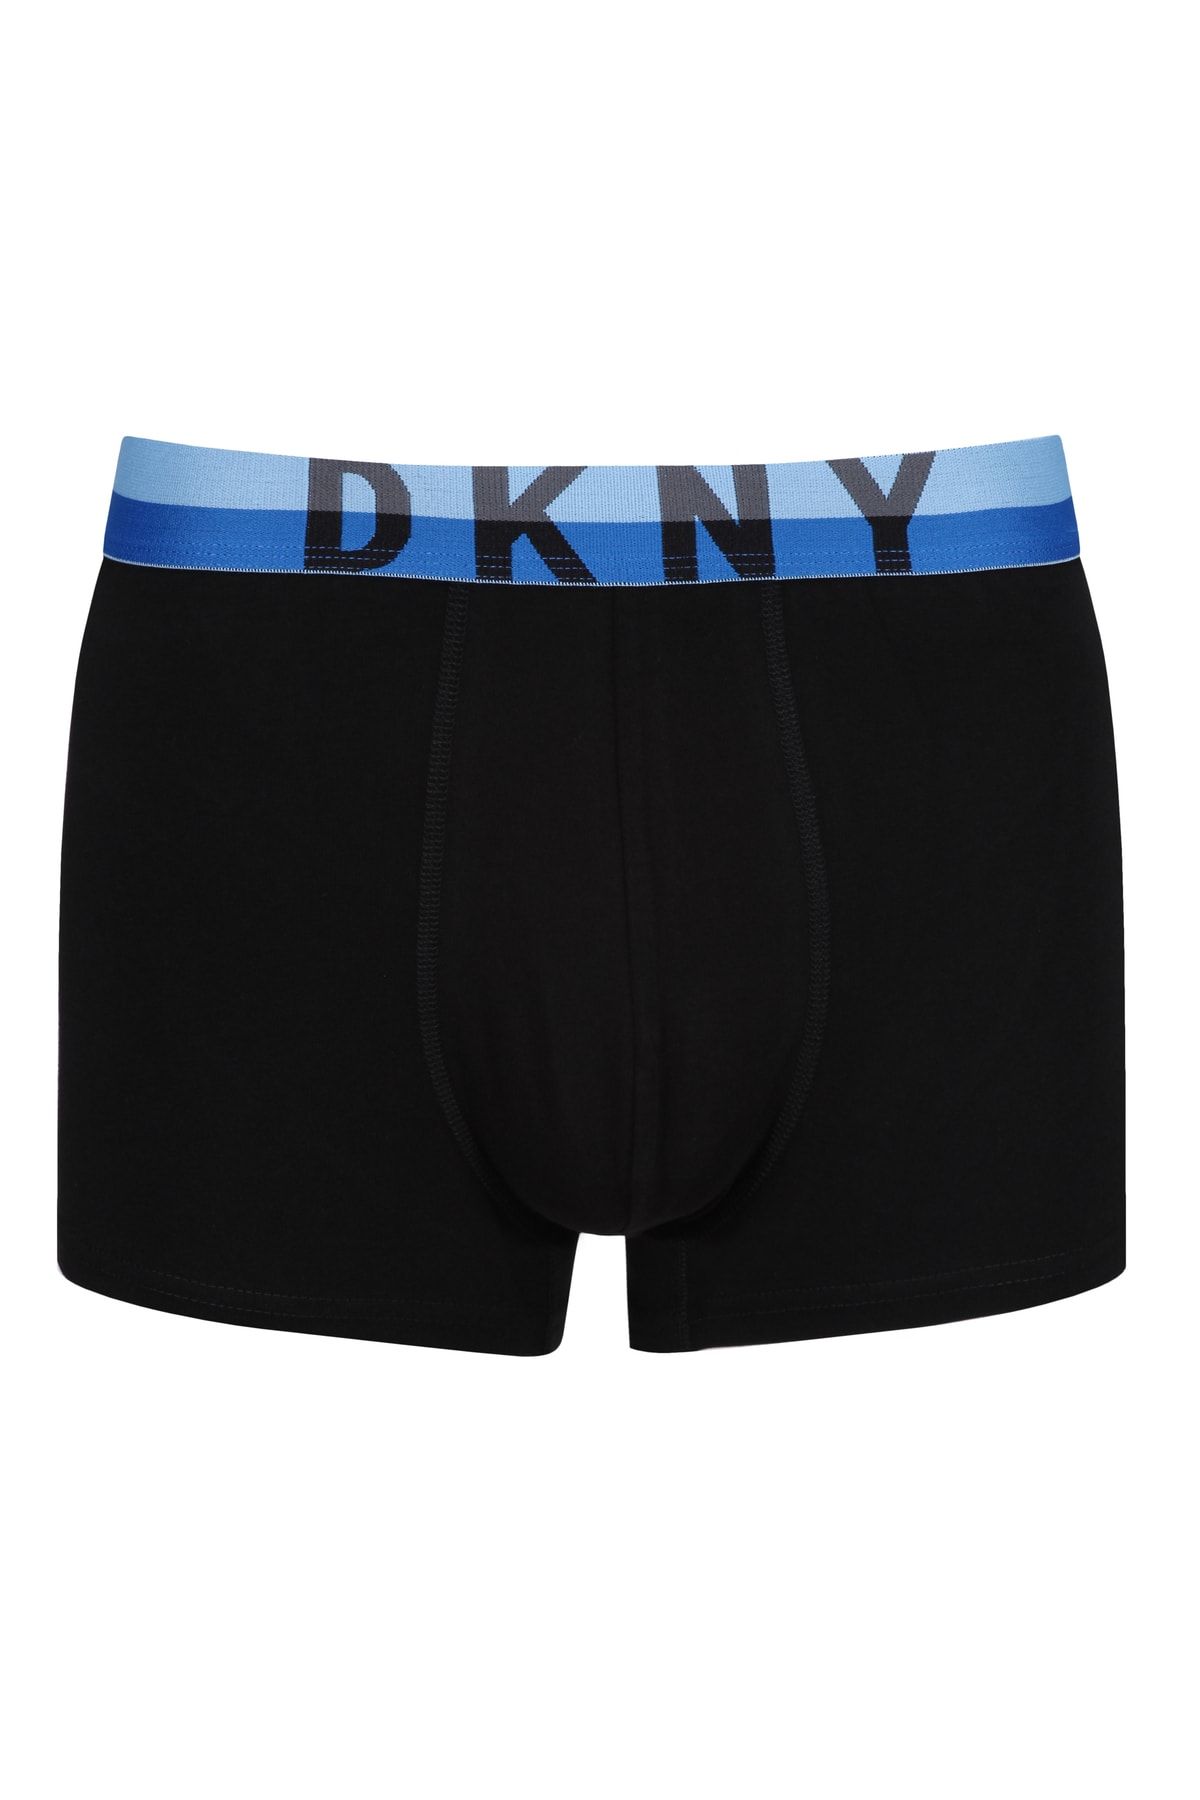 Dkny, Underwear & Socks, Dkny Boxer Briefs Size Small